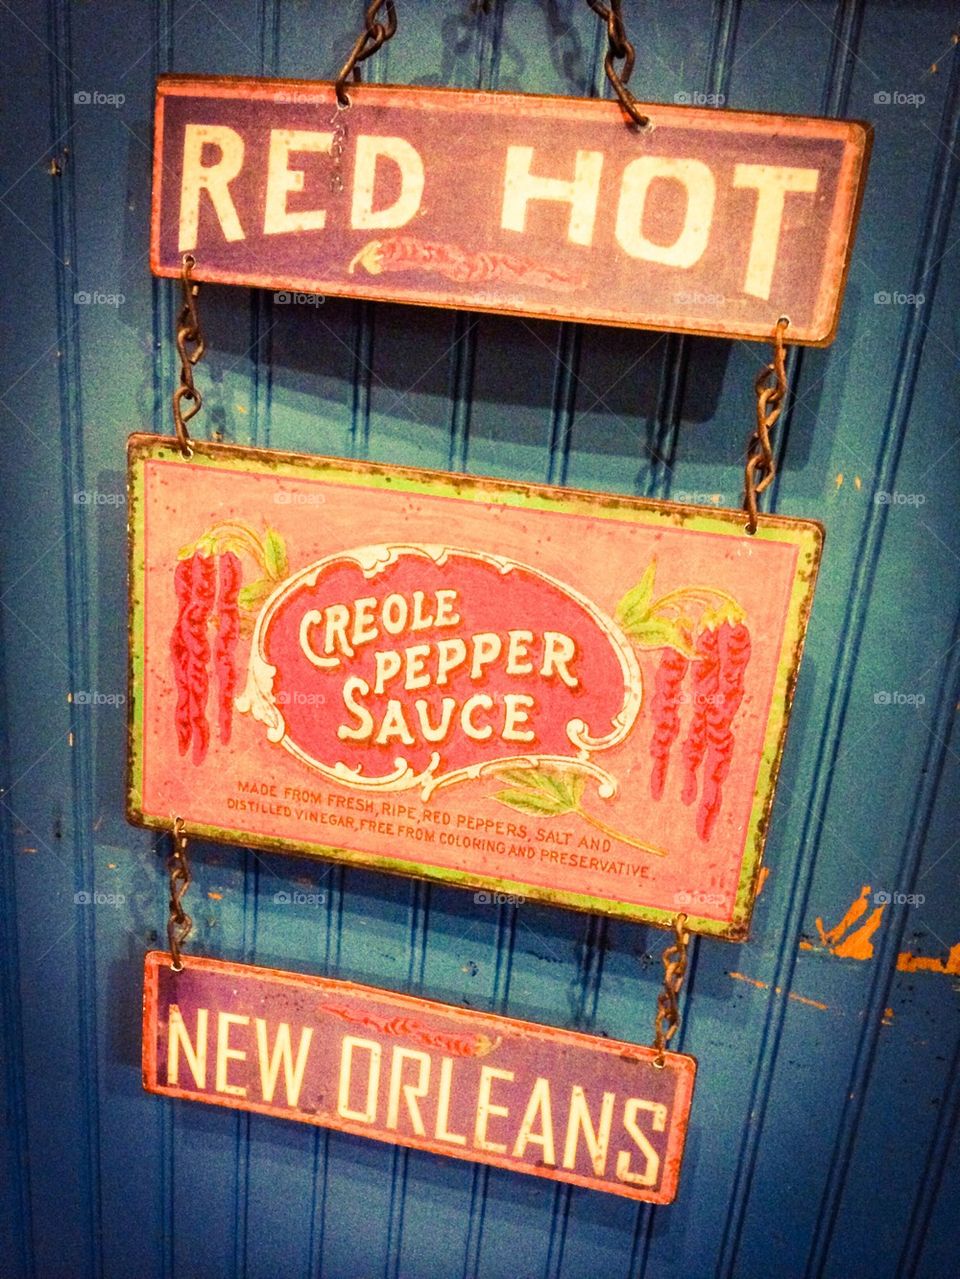 Creole pepper sauce